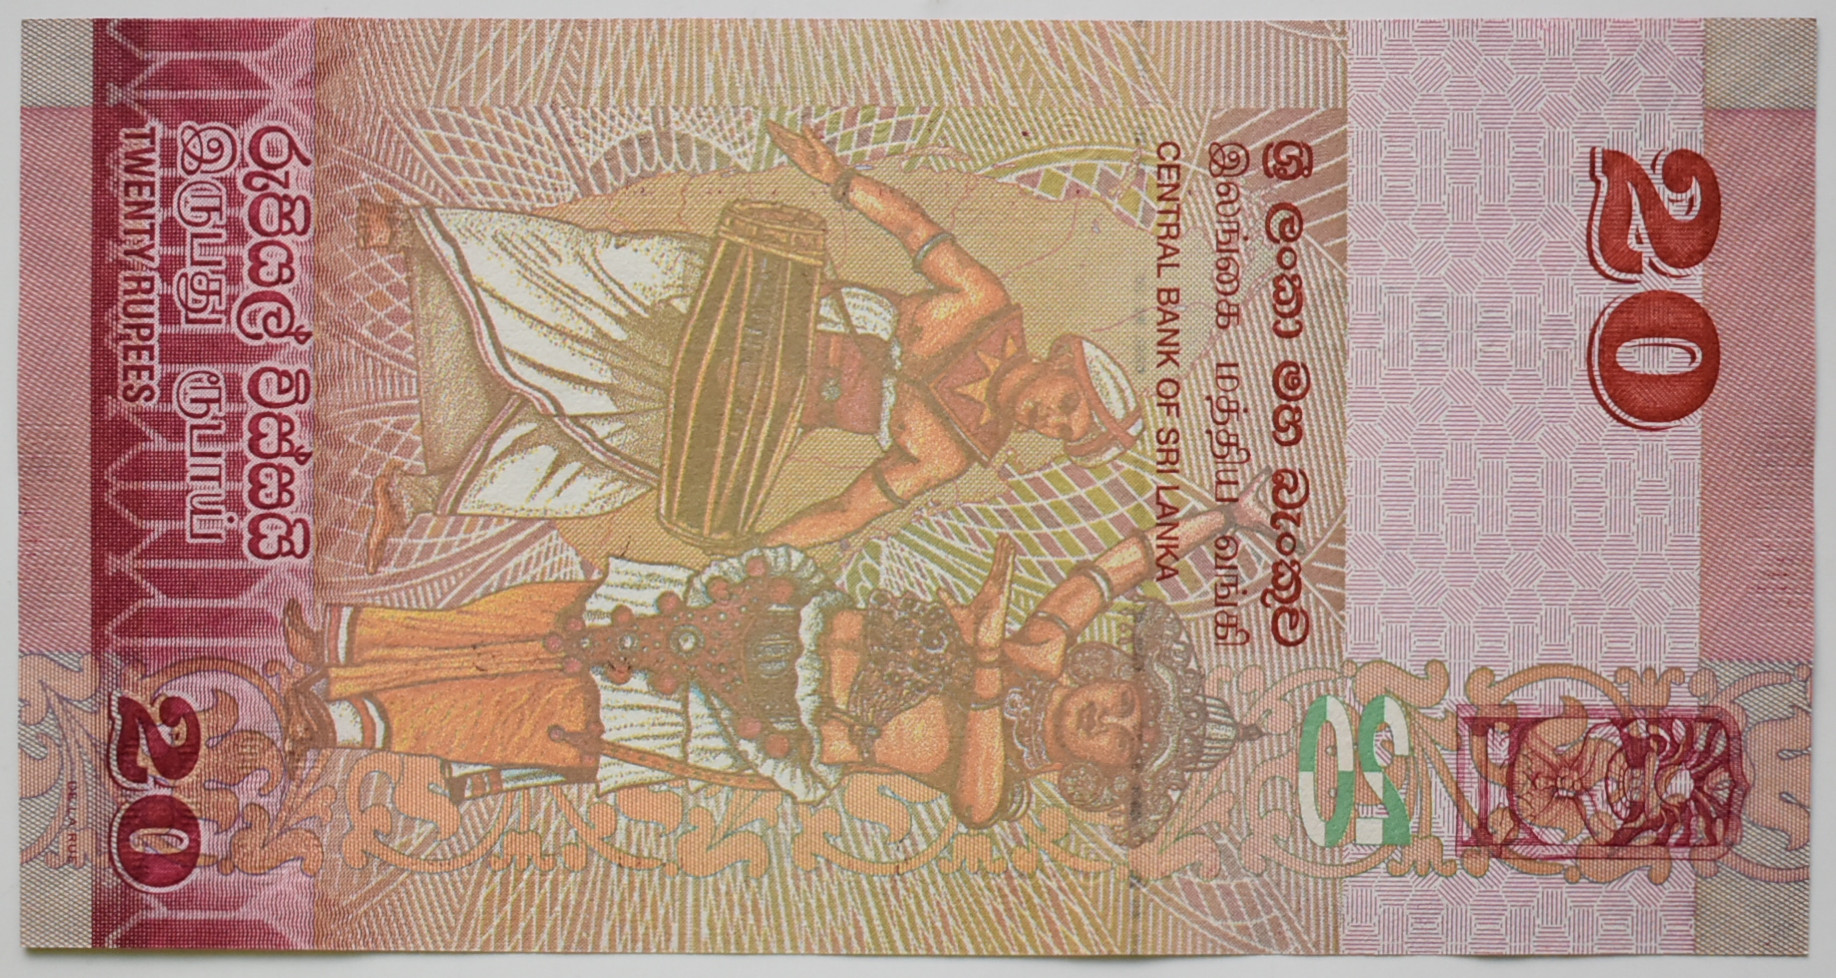 Srí Lanka 20 Rupees 2015